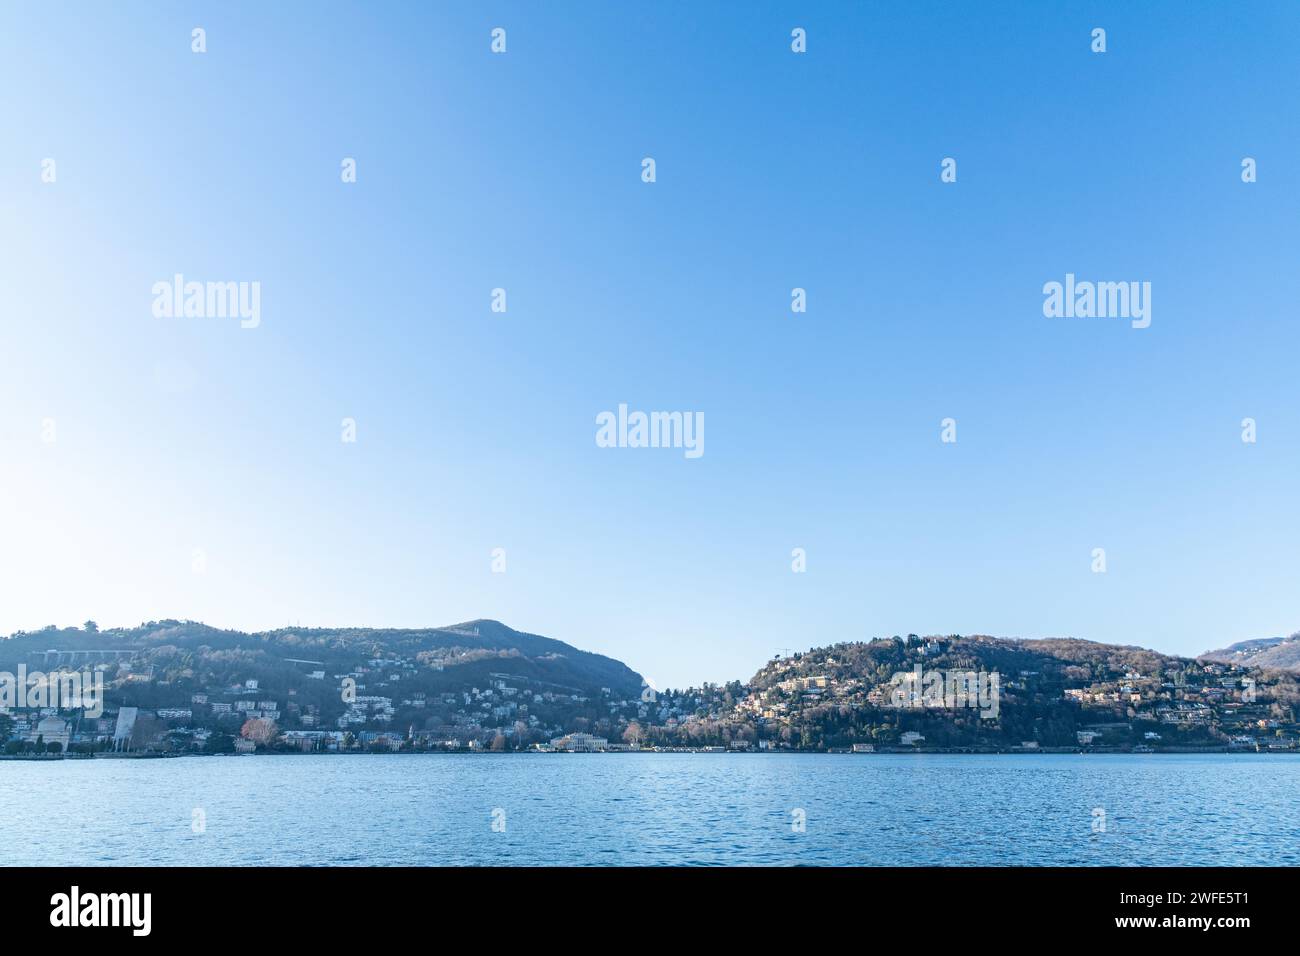 A scenic view of Lake Como / Lago di Como in the Alps mountains in Italy Stock Photo